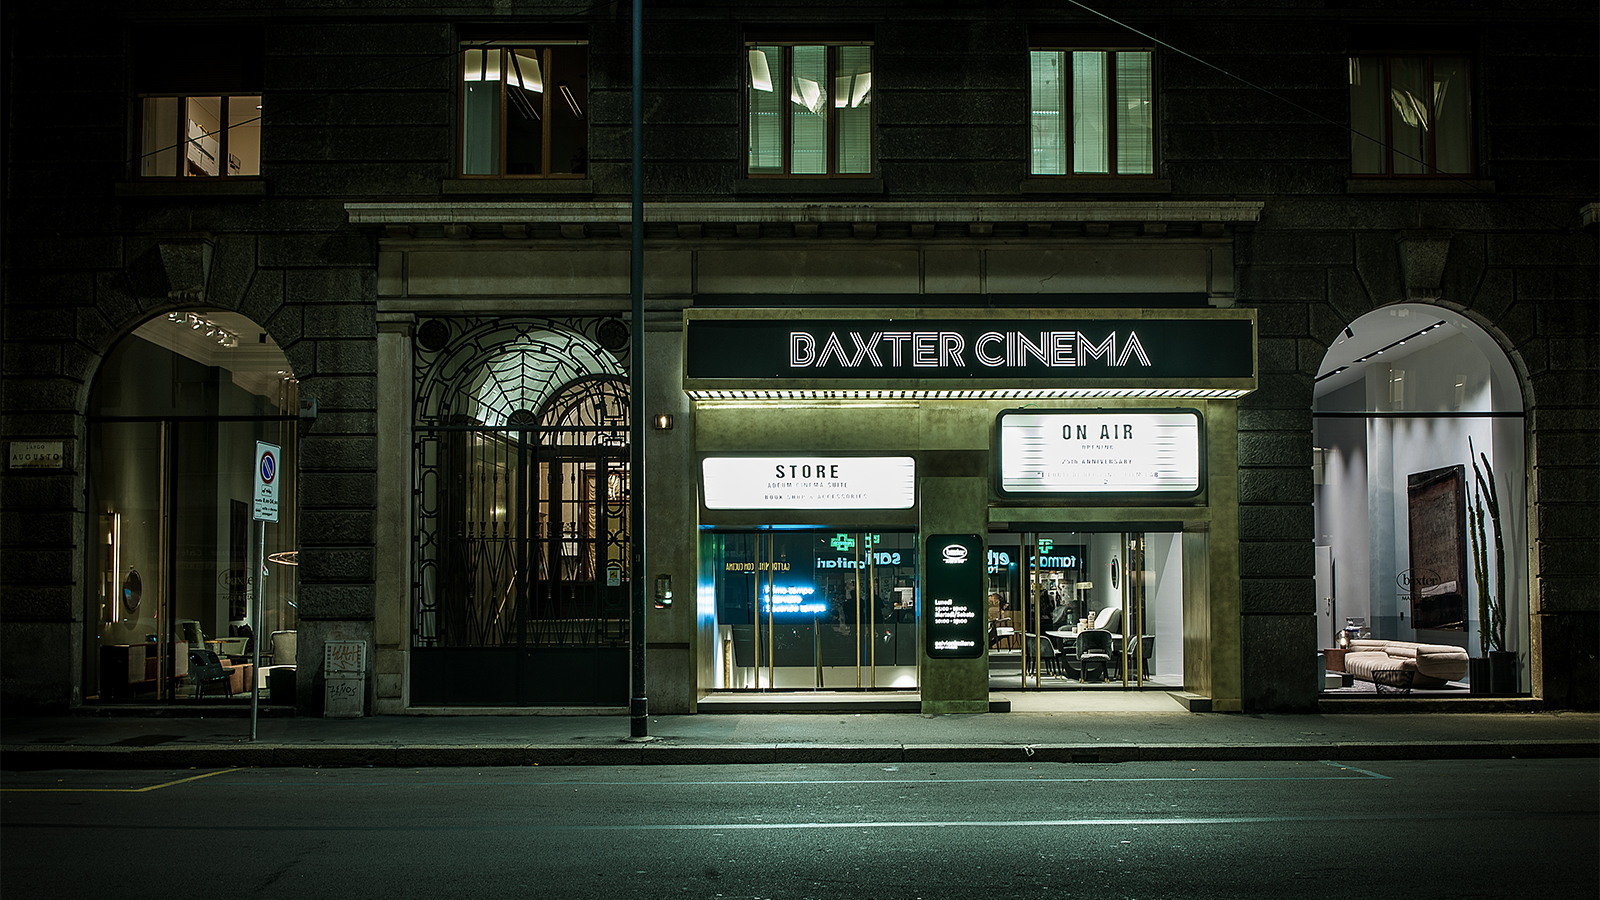 Baxter cinema